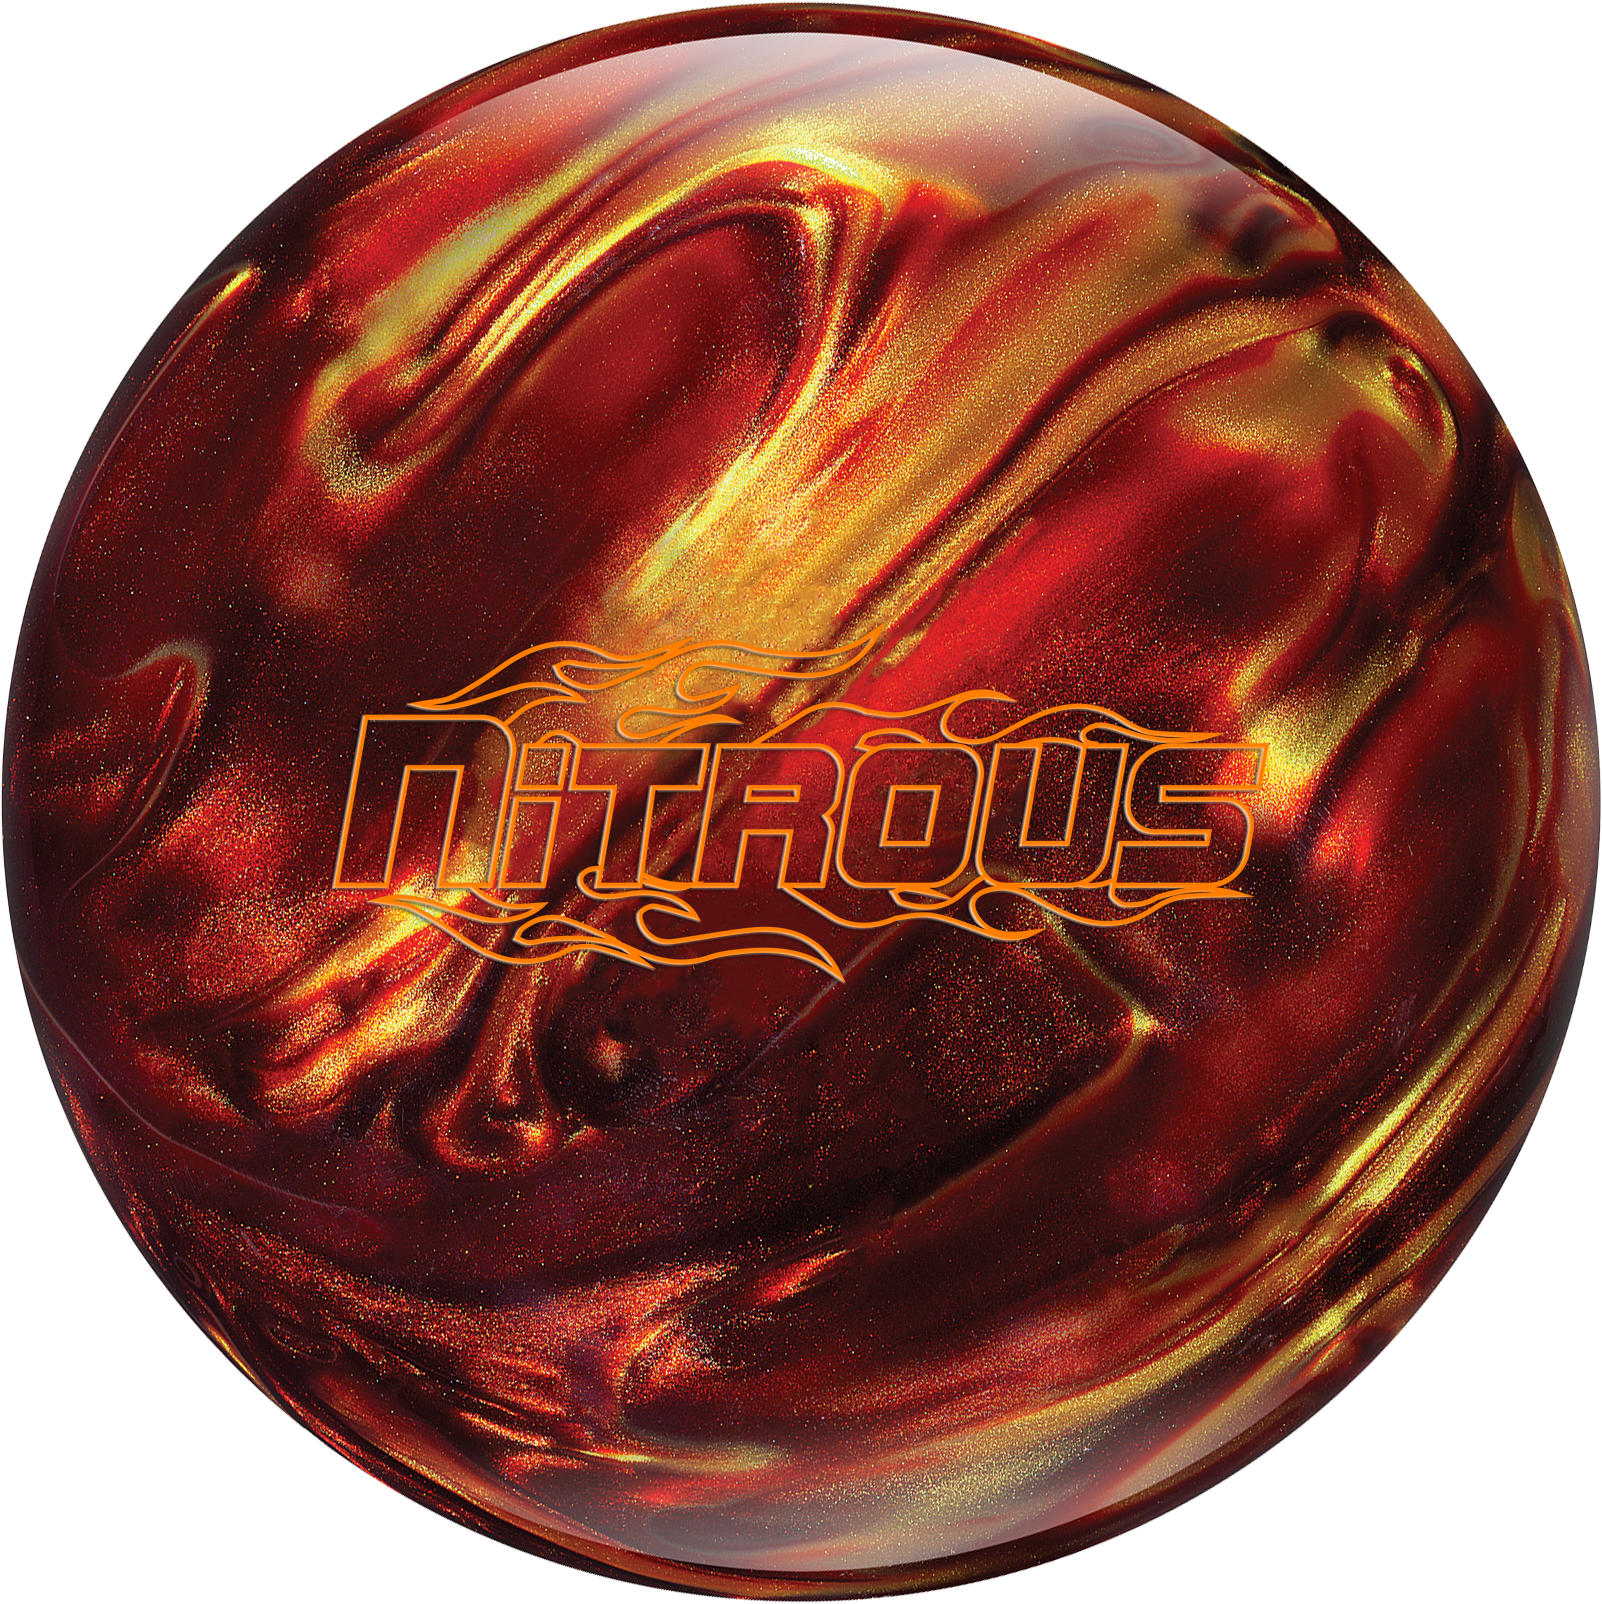 Columbia 300 Nitrous Red/gold Bowling Ball - Nitrous Bowling Ball (1700x1700), Png Download